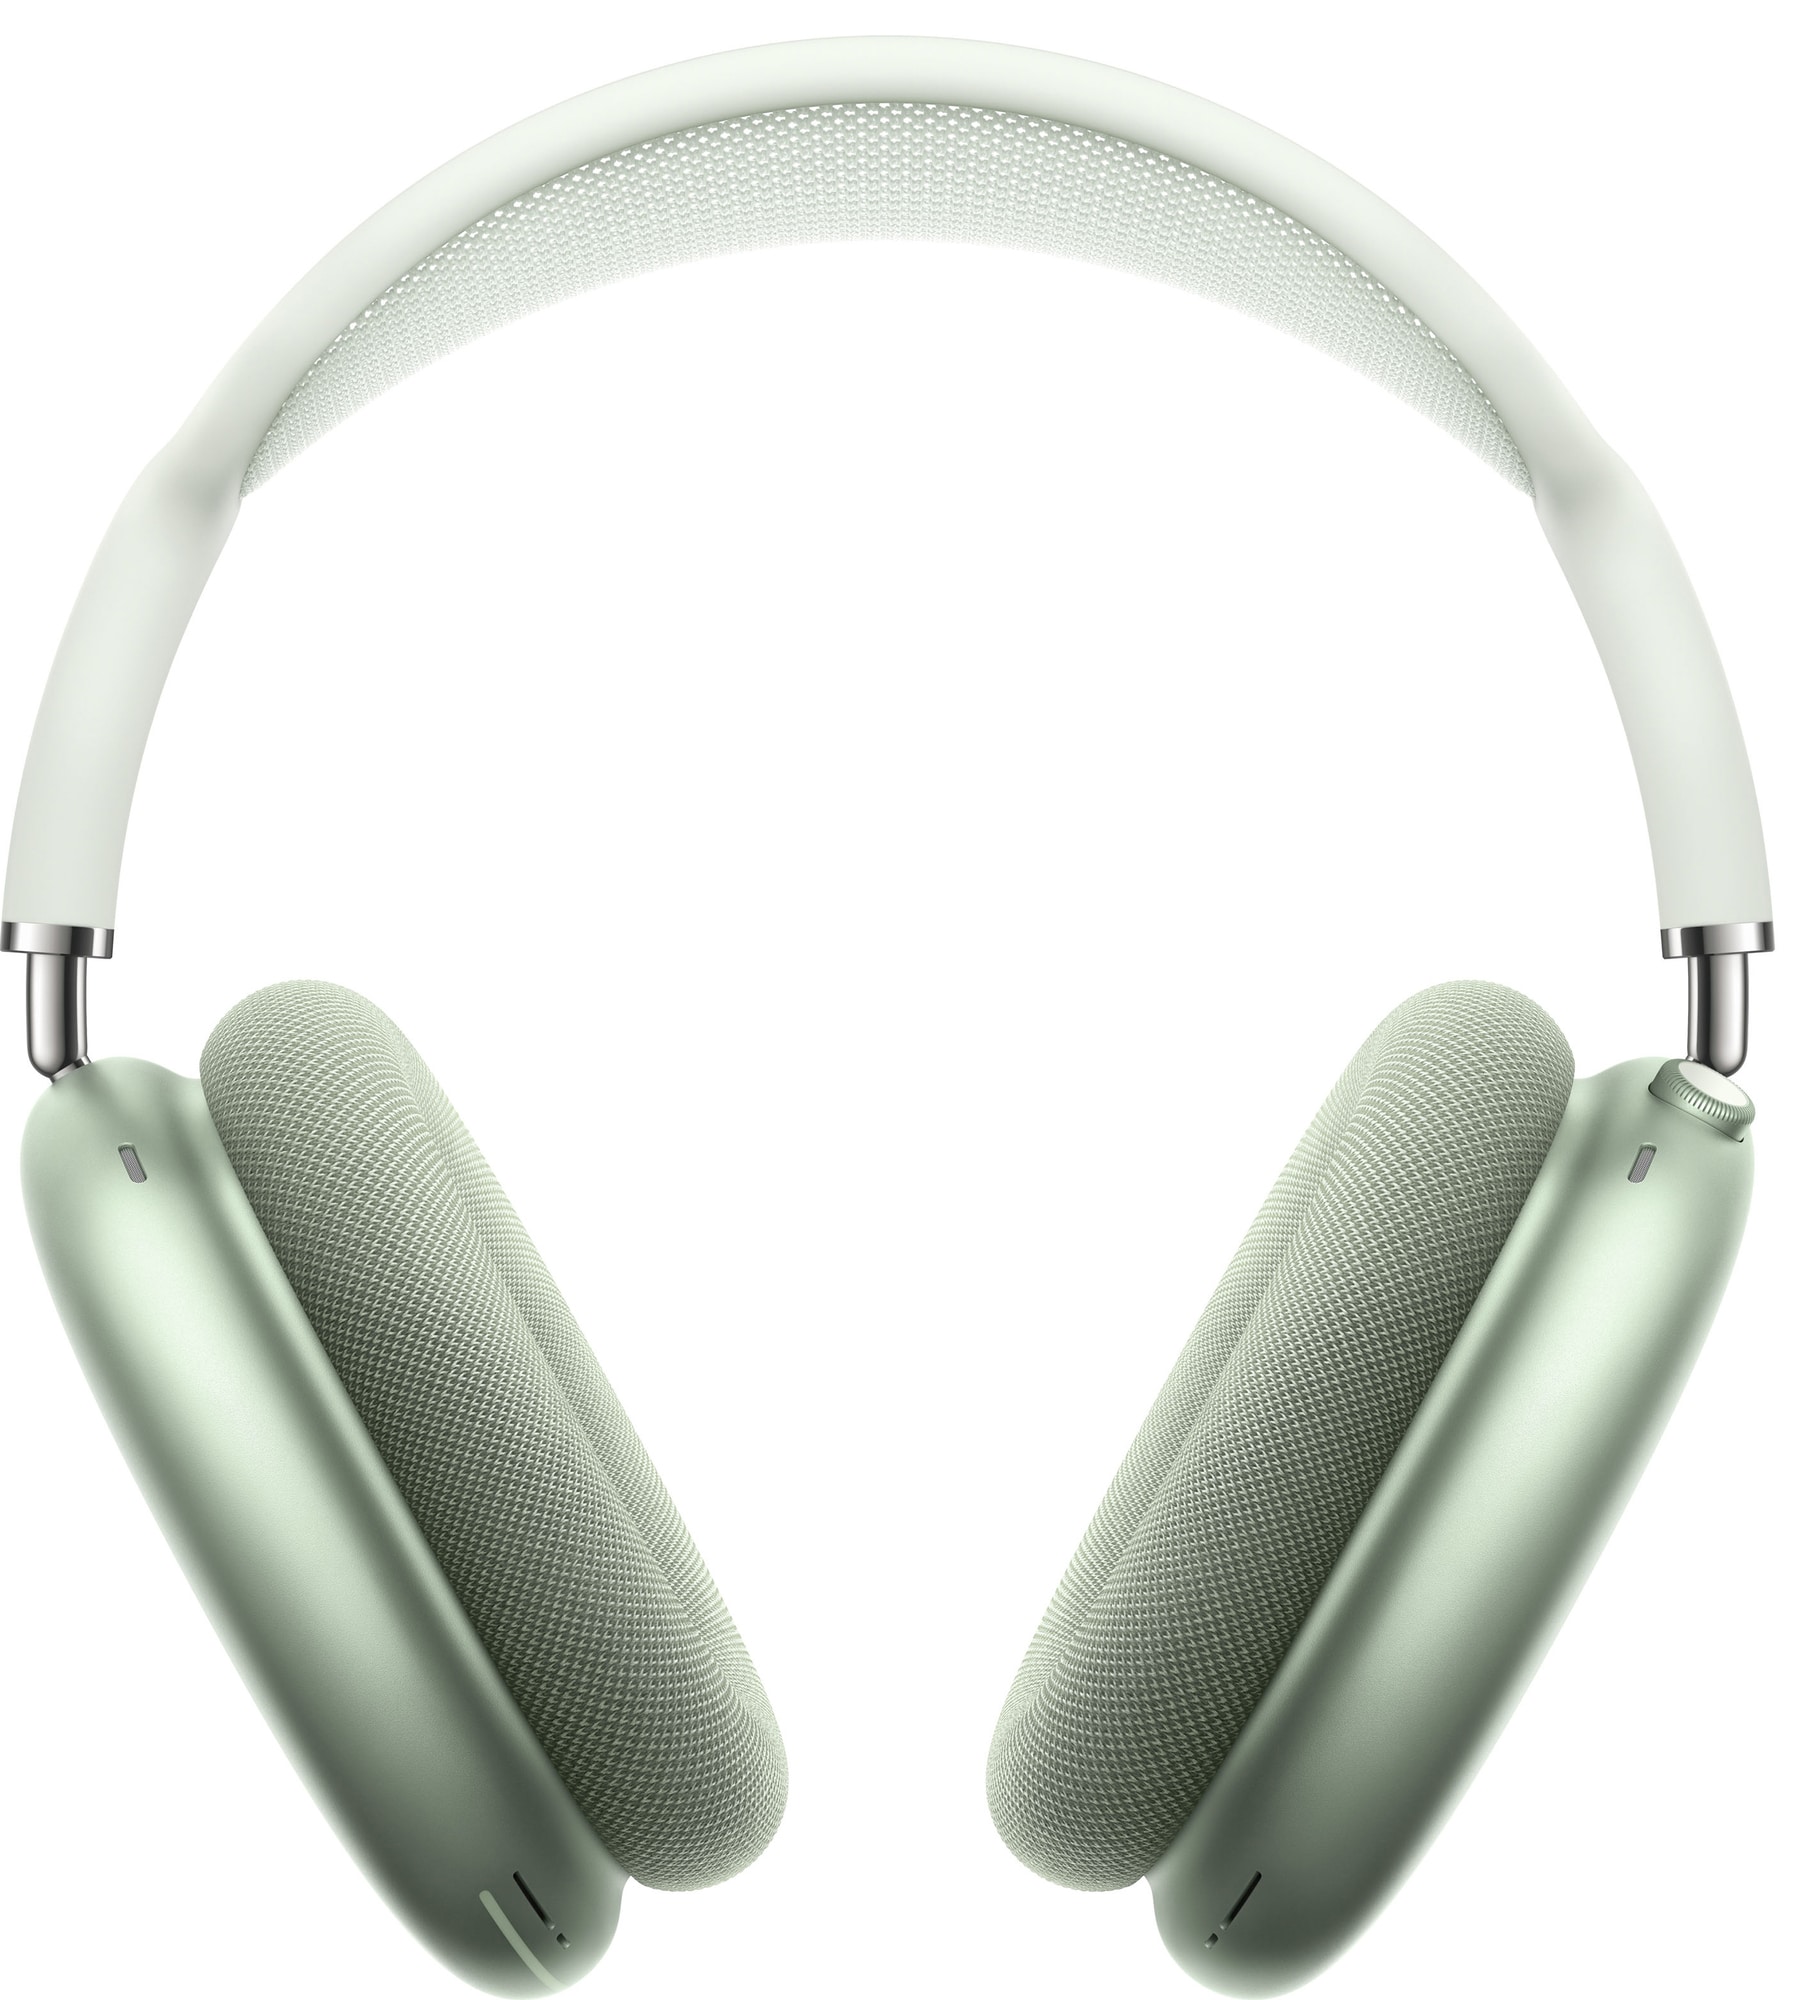 Apple AirPods Max trådlösa around ear-hörlurar (green) - Elgiganten